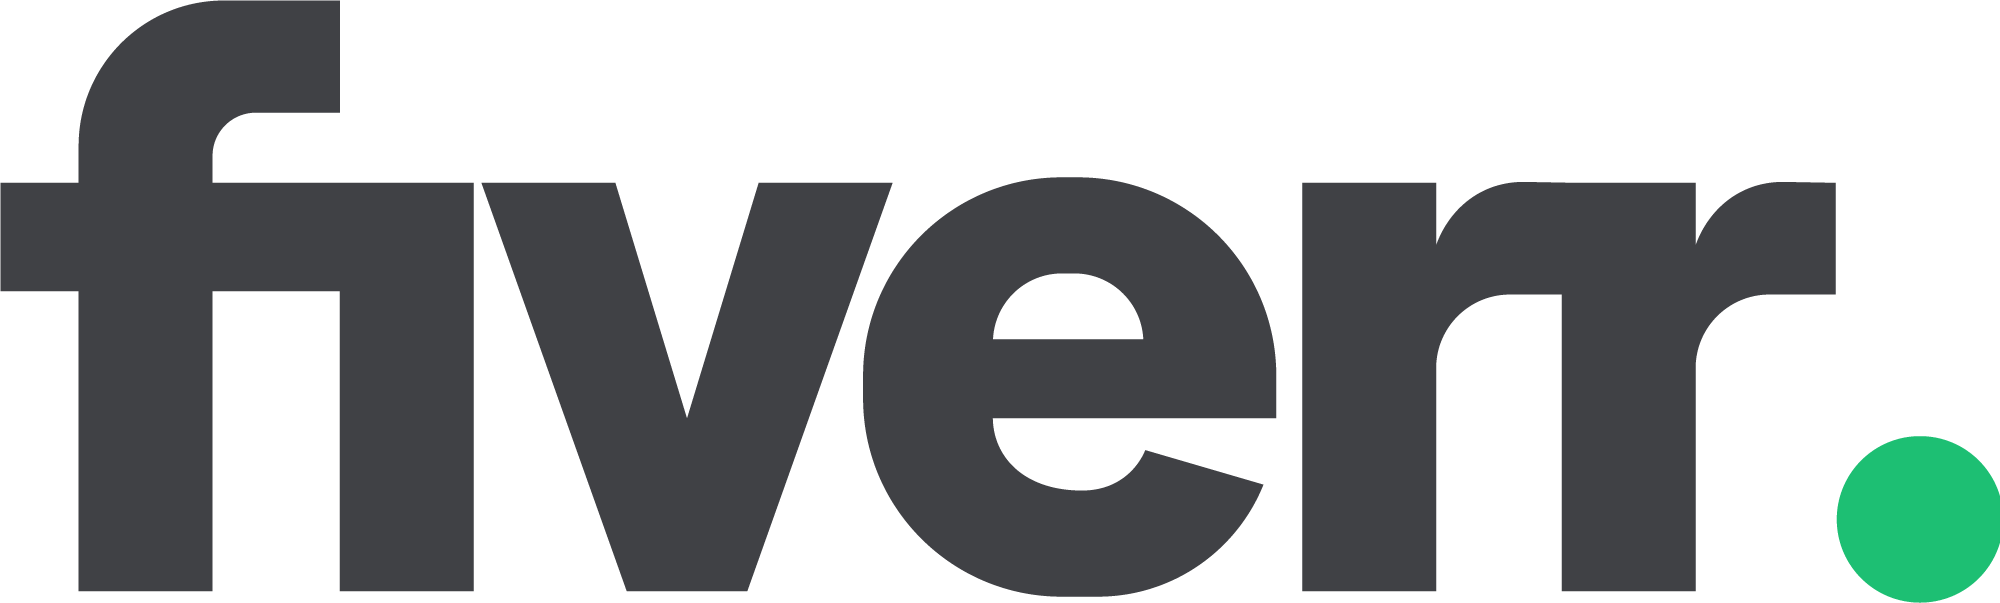 fiverr logo png